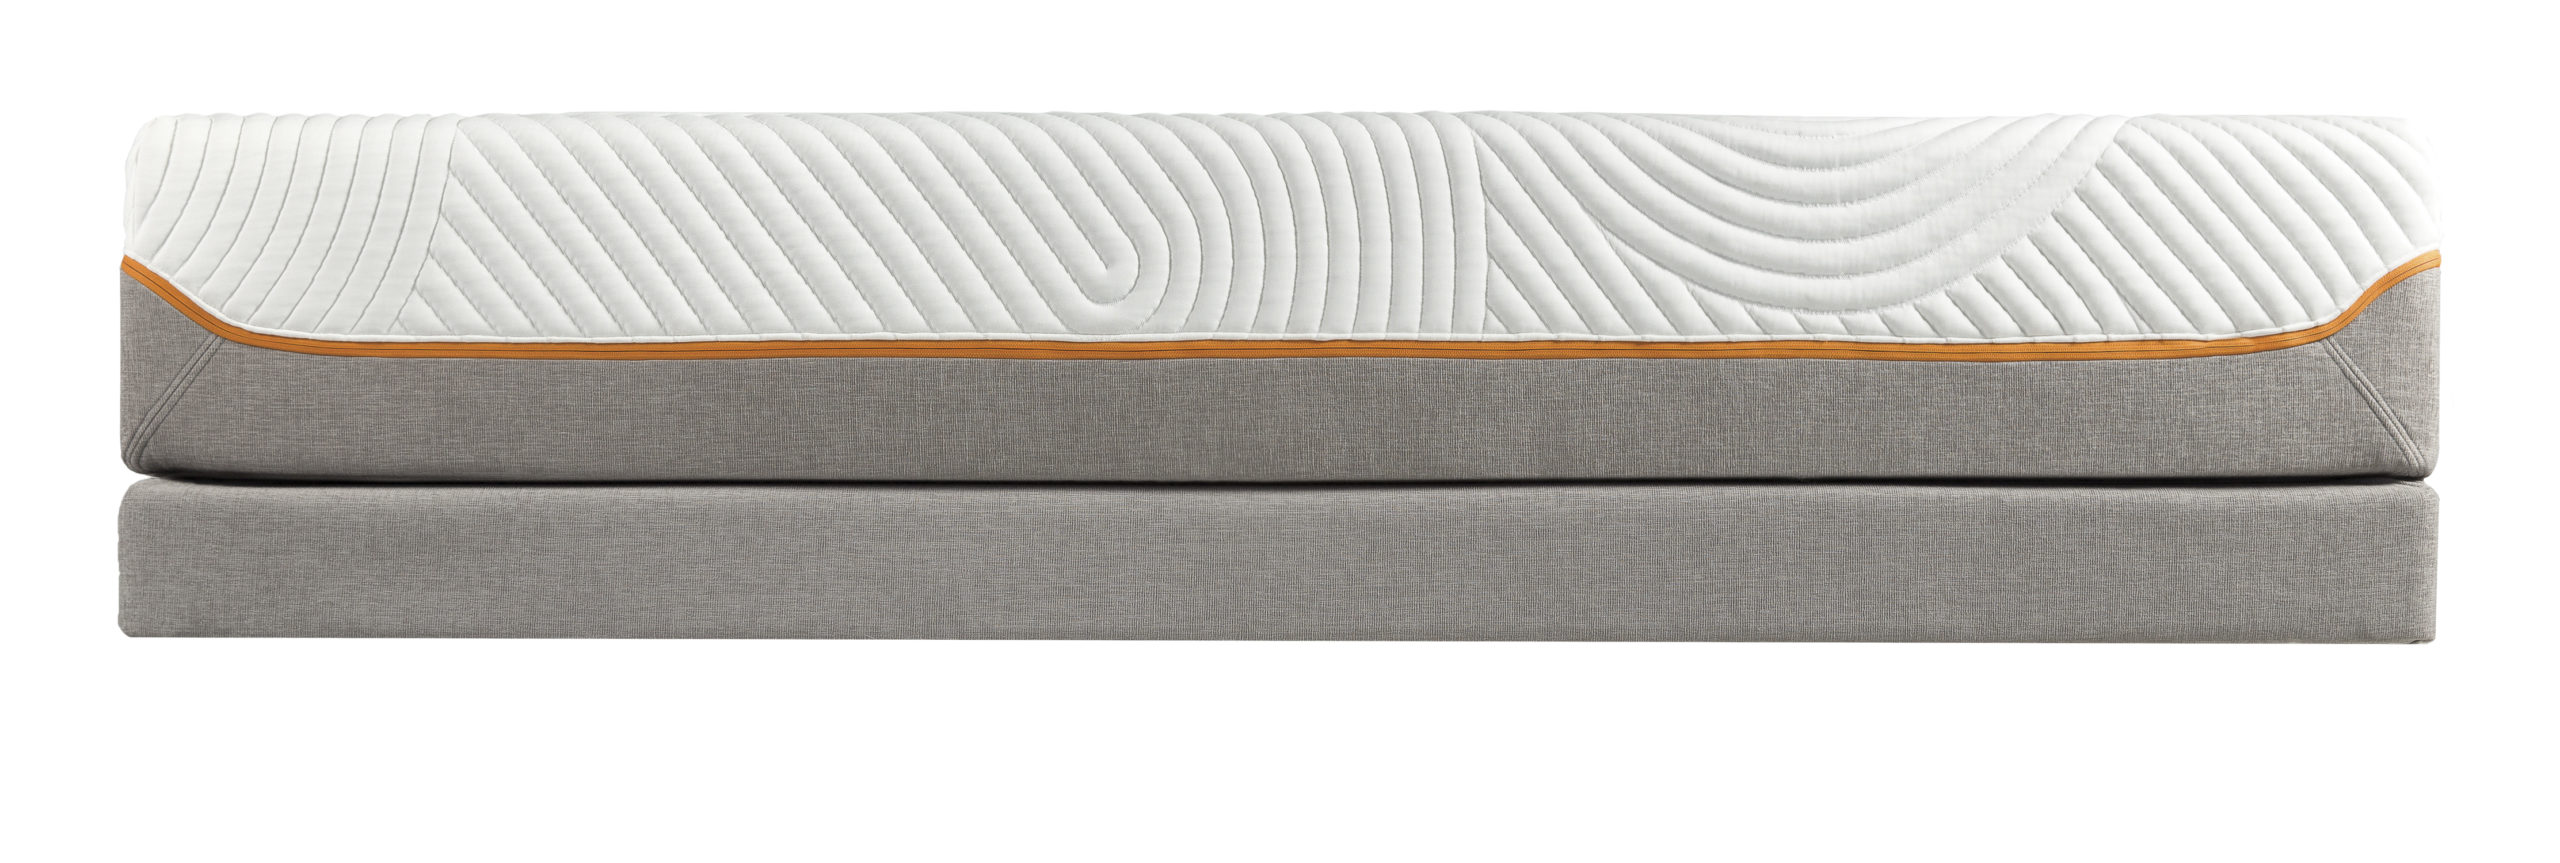 tempur pedic contour elite breeze queen mattress